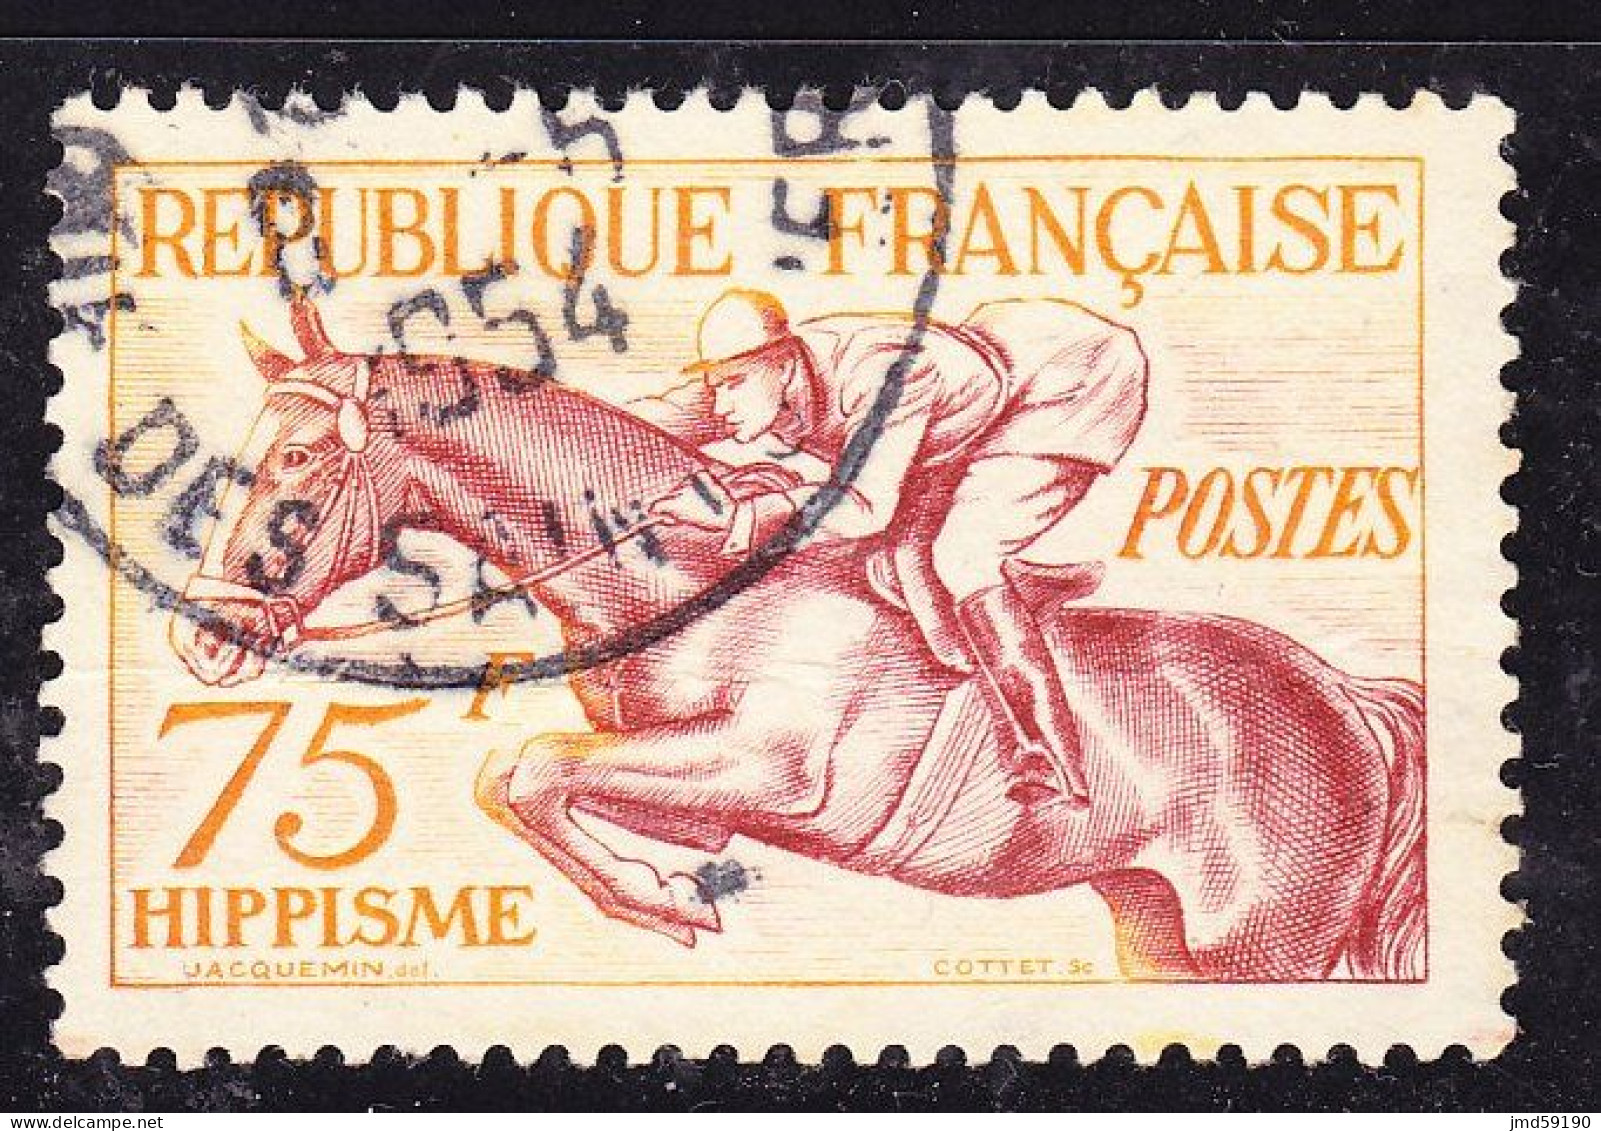 FRANCE Timbre Oblitéré N° 965 - Jeux Olympiques D'HELSINKI 1952 - 75Fr Hippisme - Gebruikt